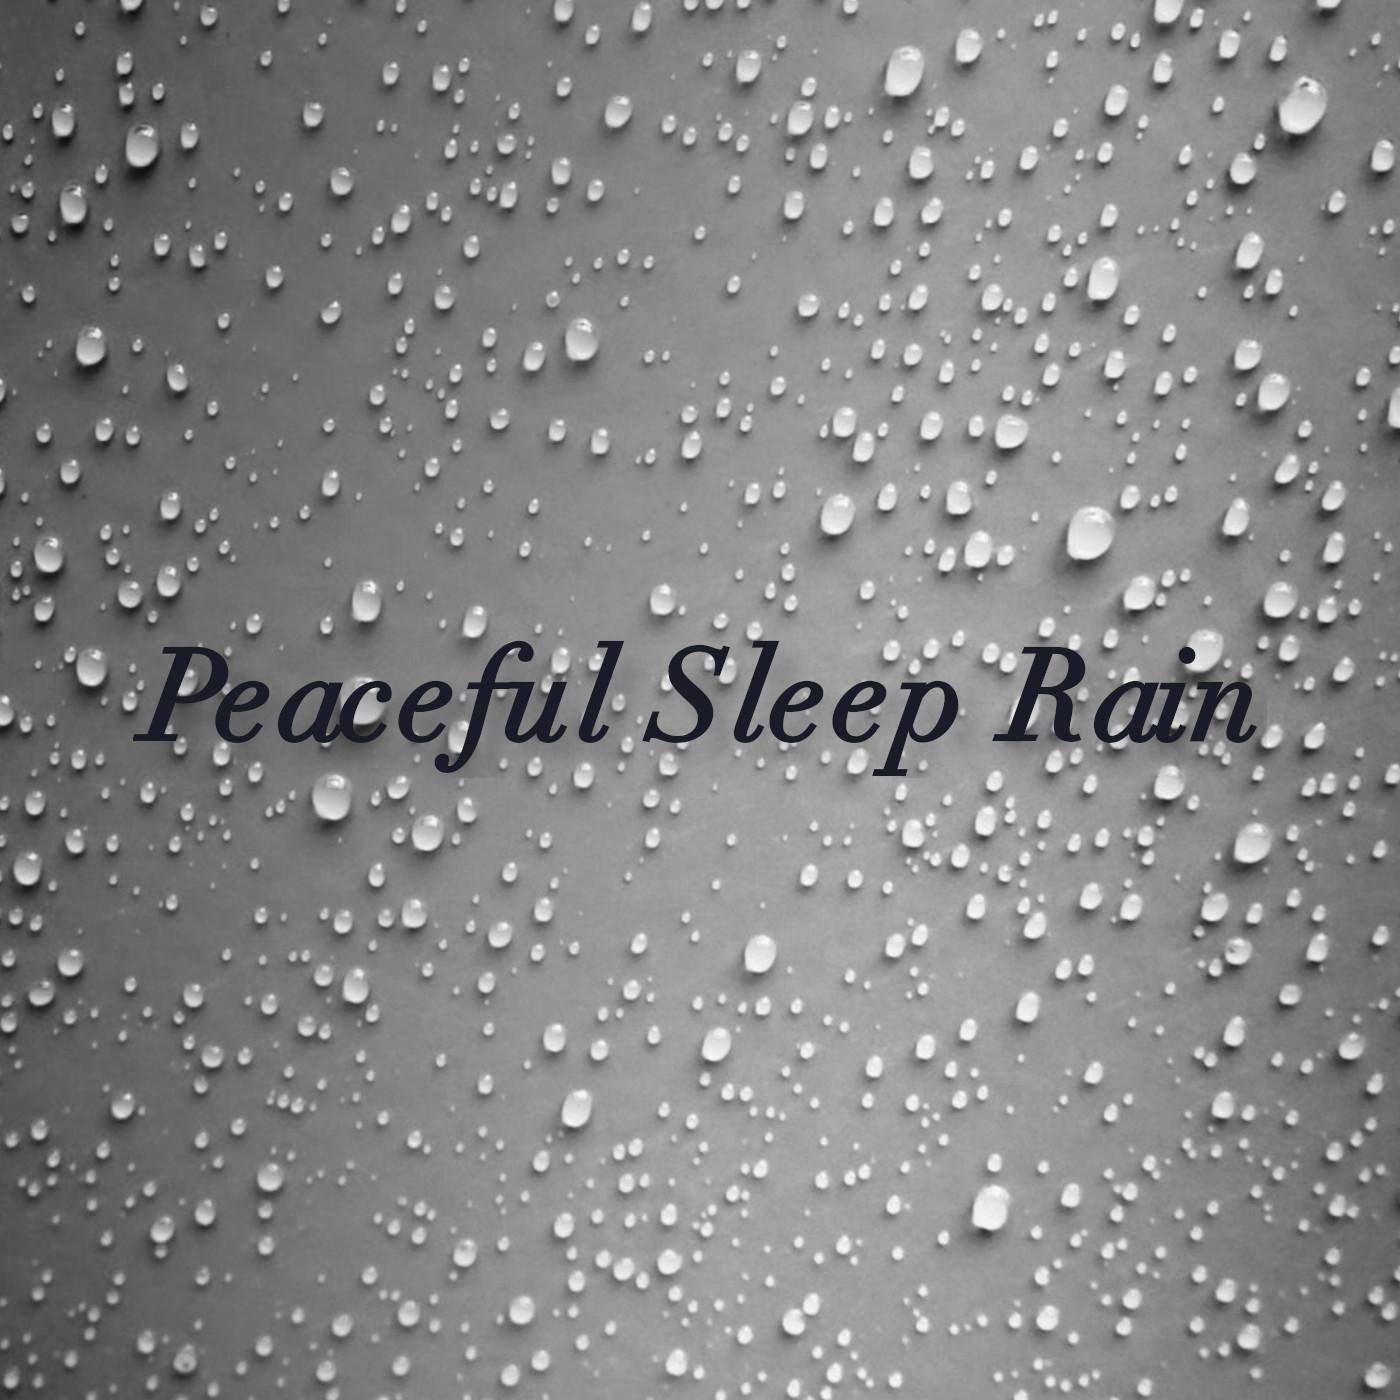 Peaceful Sleep Rain